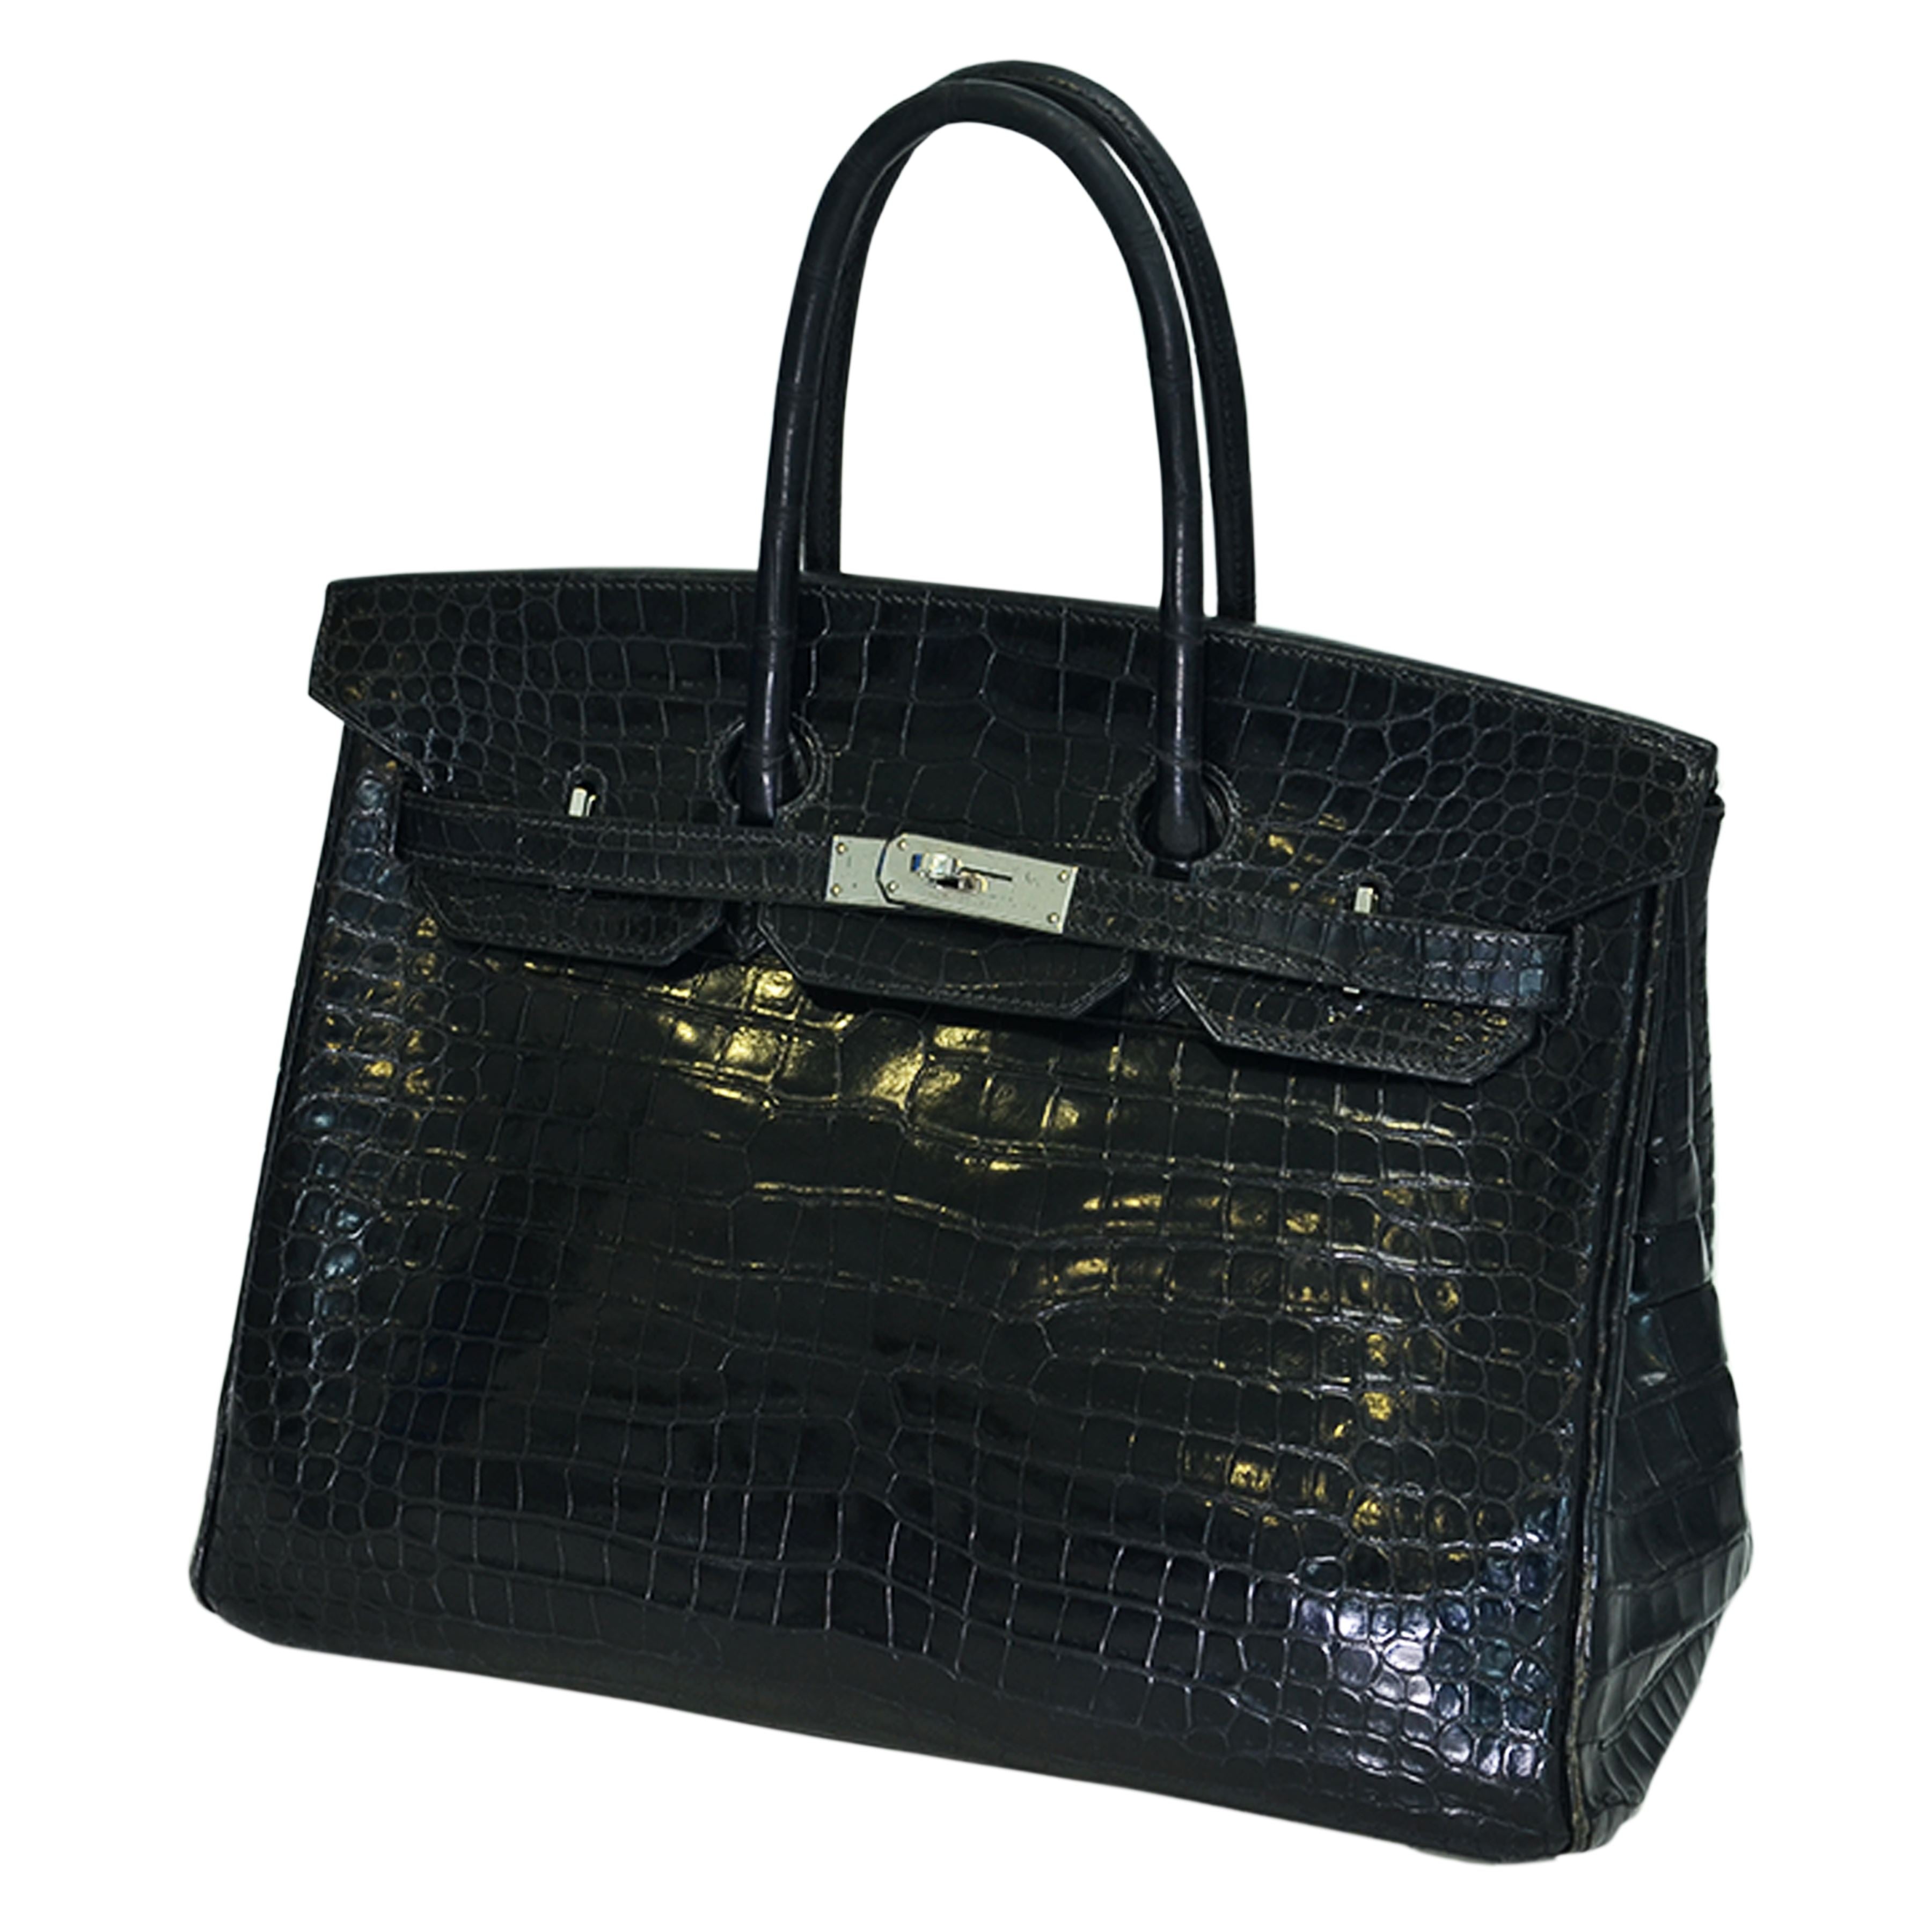 Black Porosus Birkin 35 Bag w/ PHW Bag Hermes 